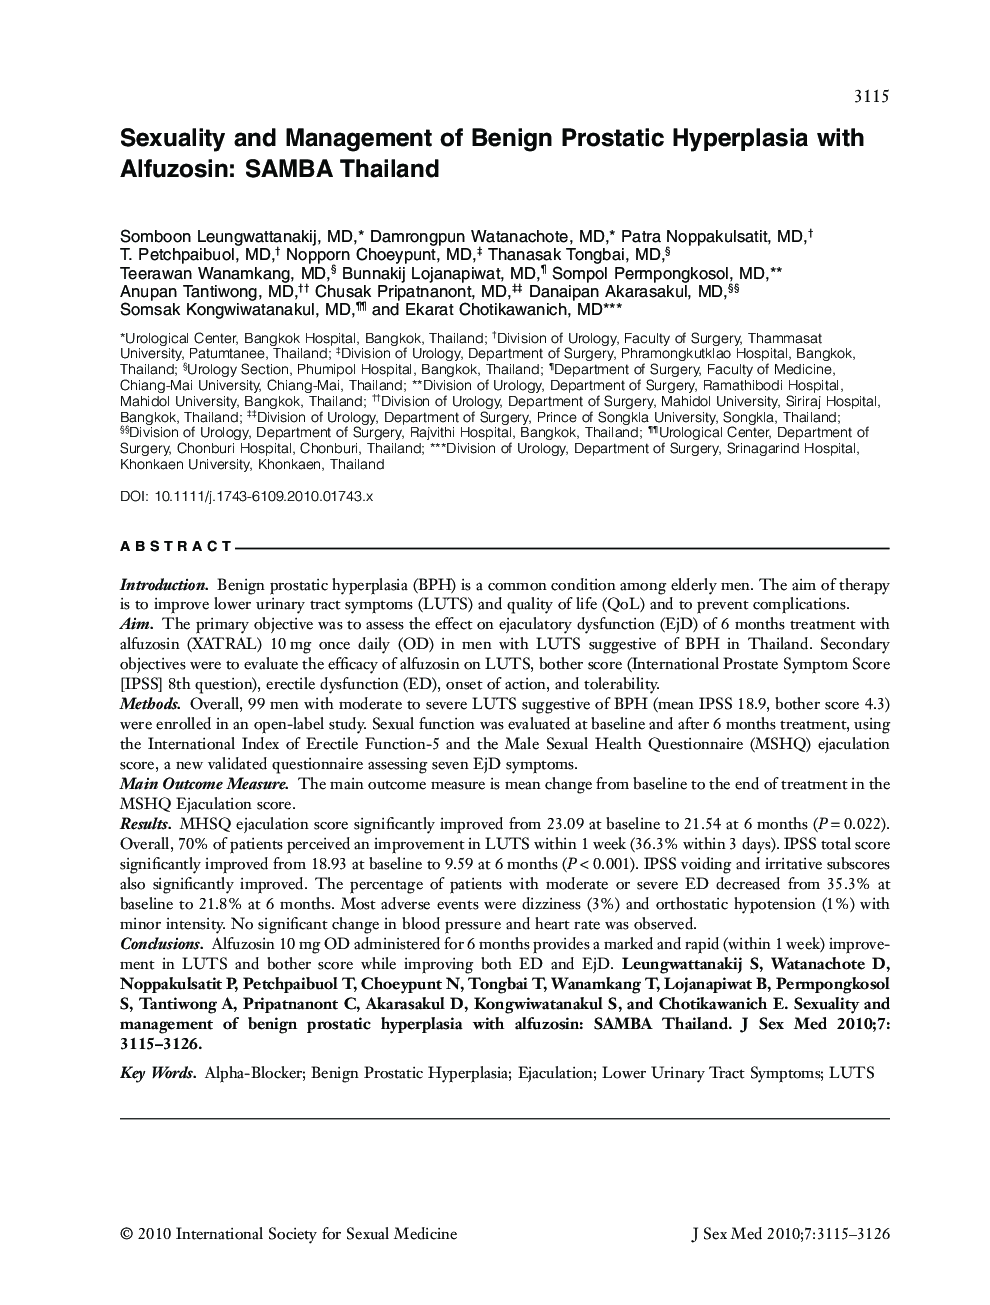 Sexuality and Management of Benign Prostatic Hyperplasia with Alfuzosin: SAMBA Thailand